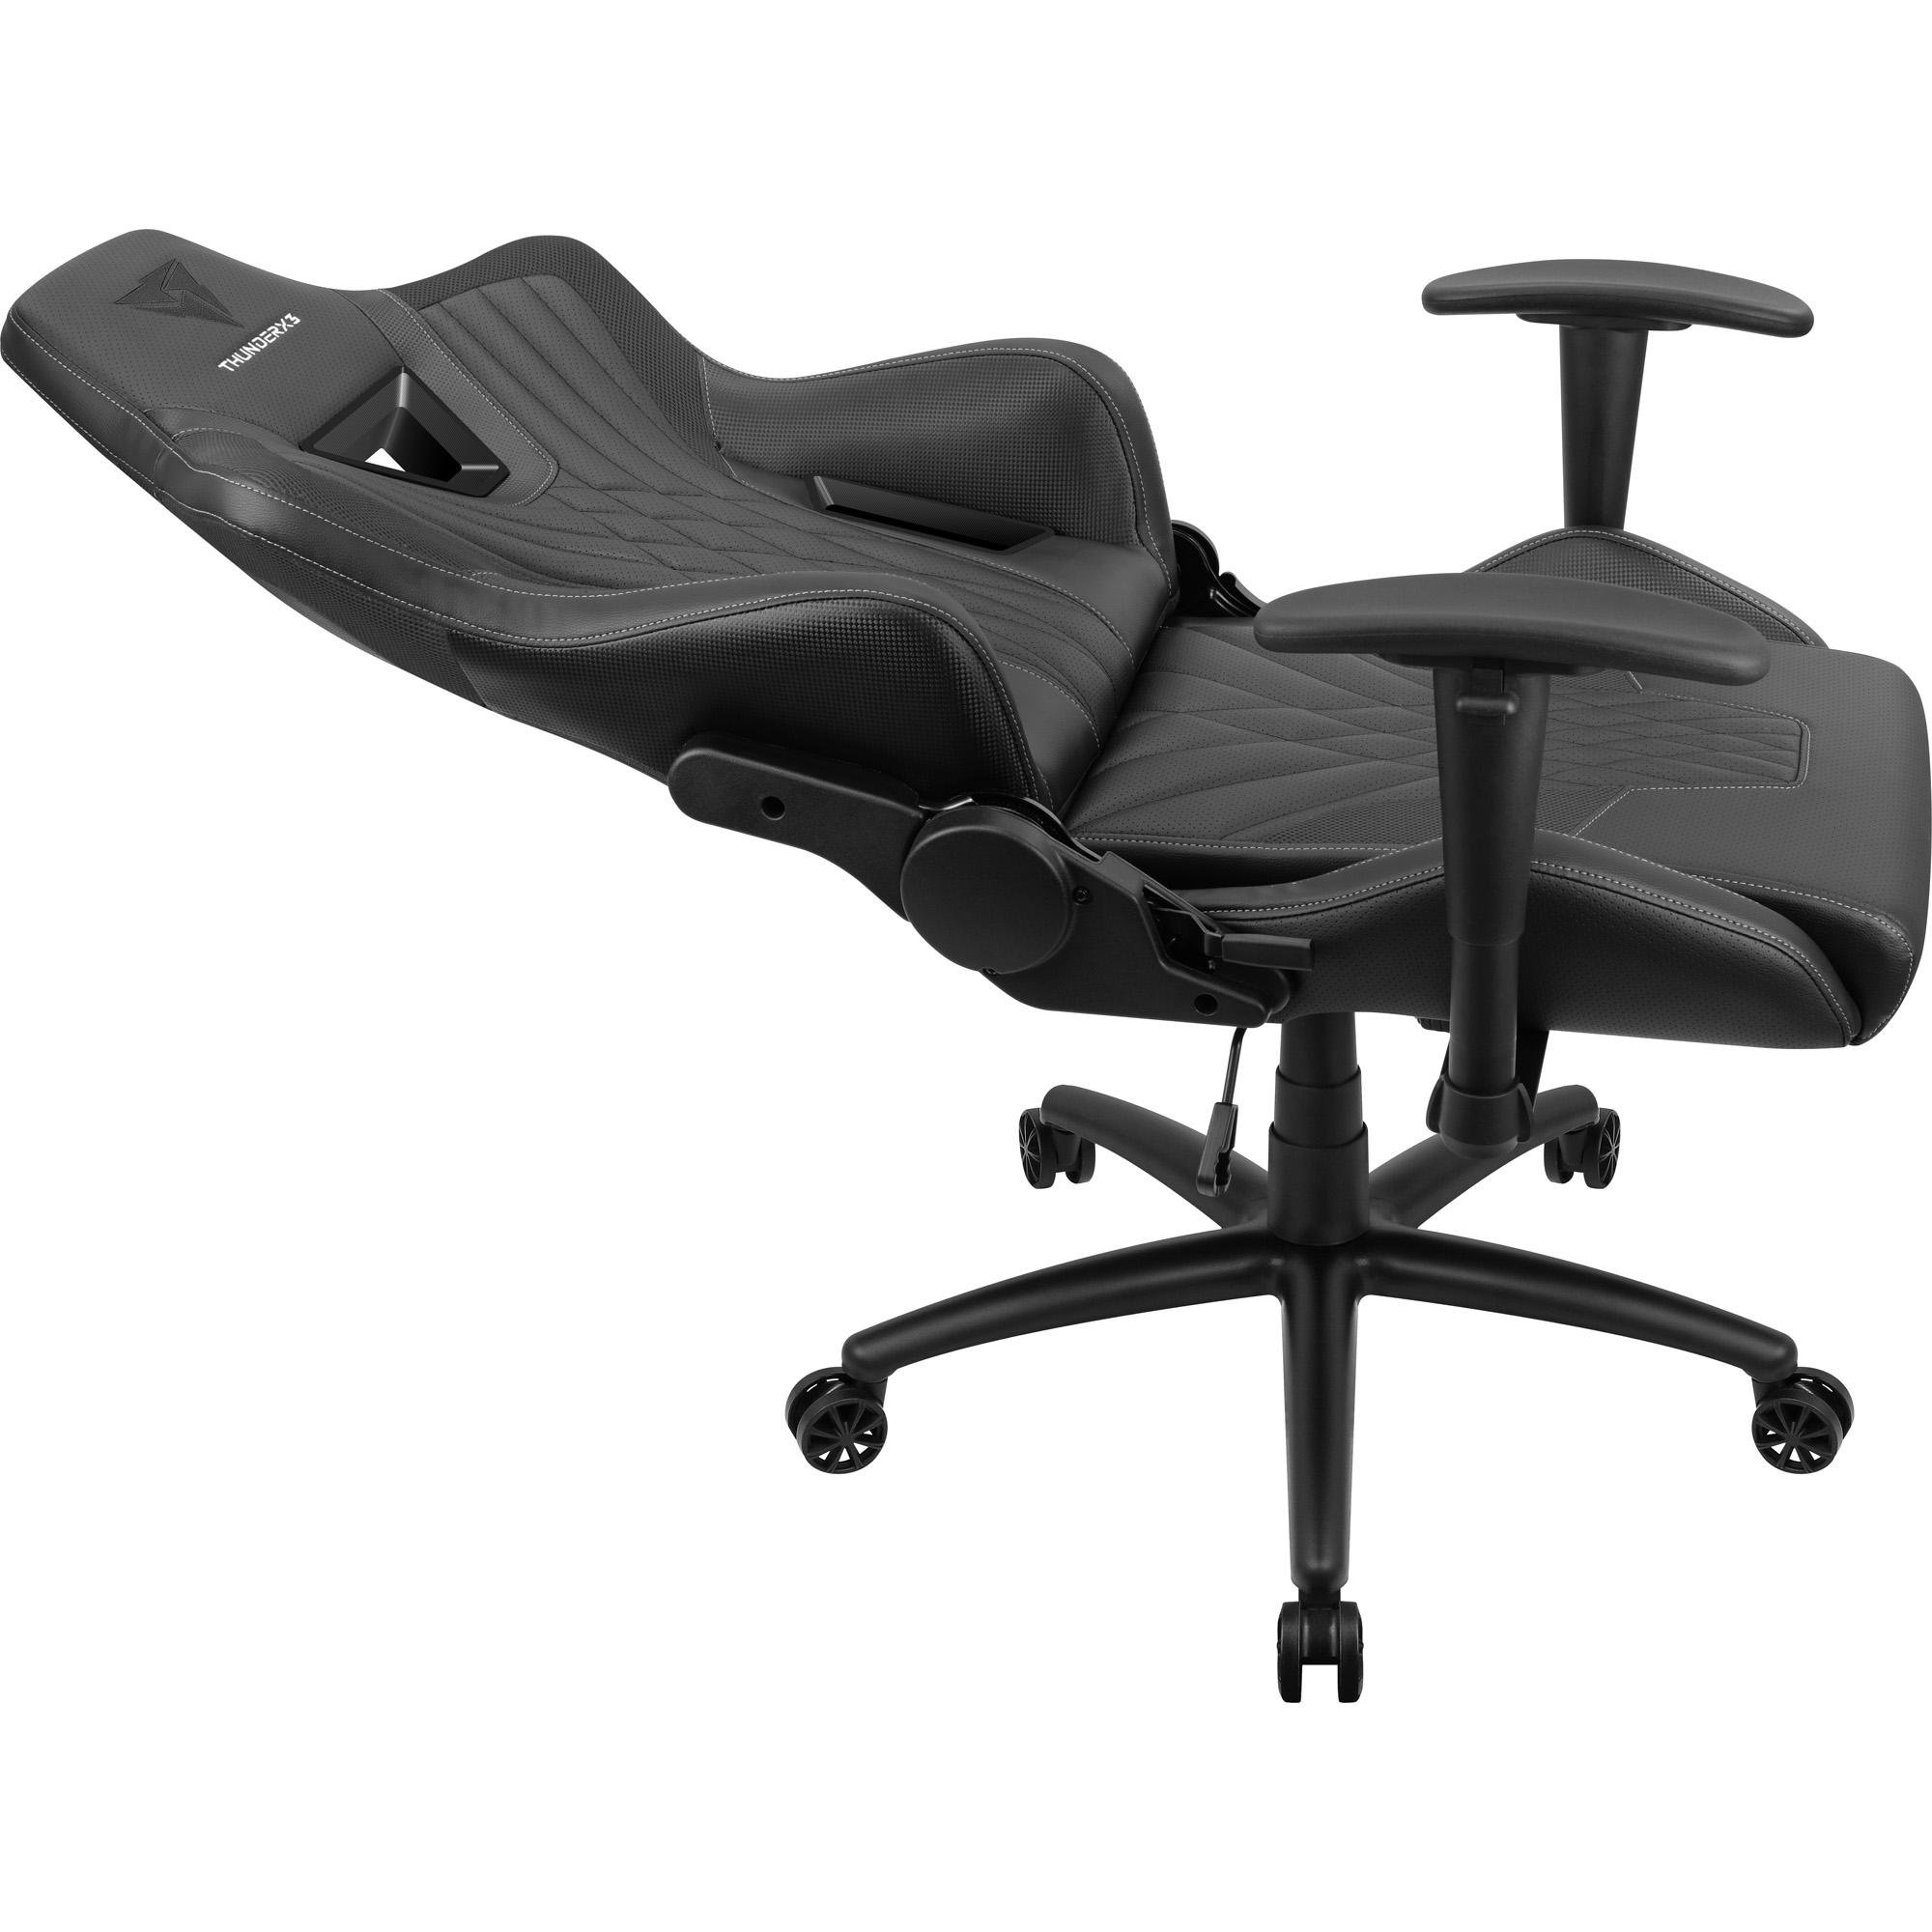 Cadeira Gamer DC3 Preta THUNDERX3